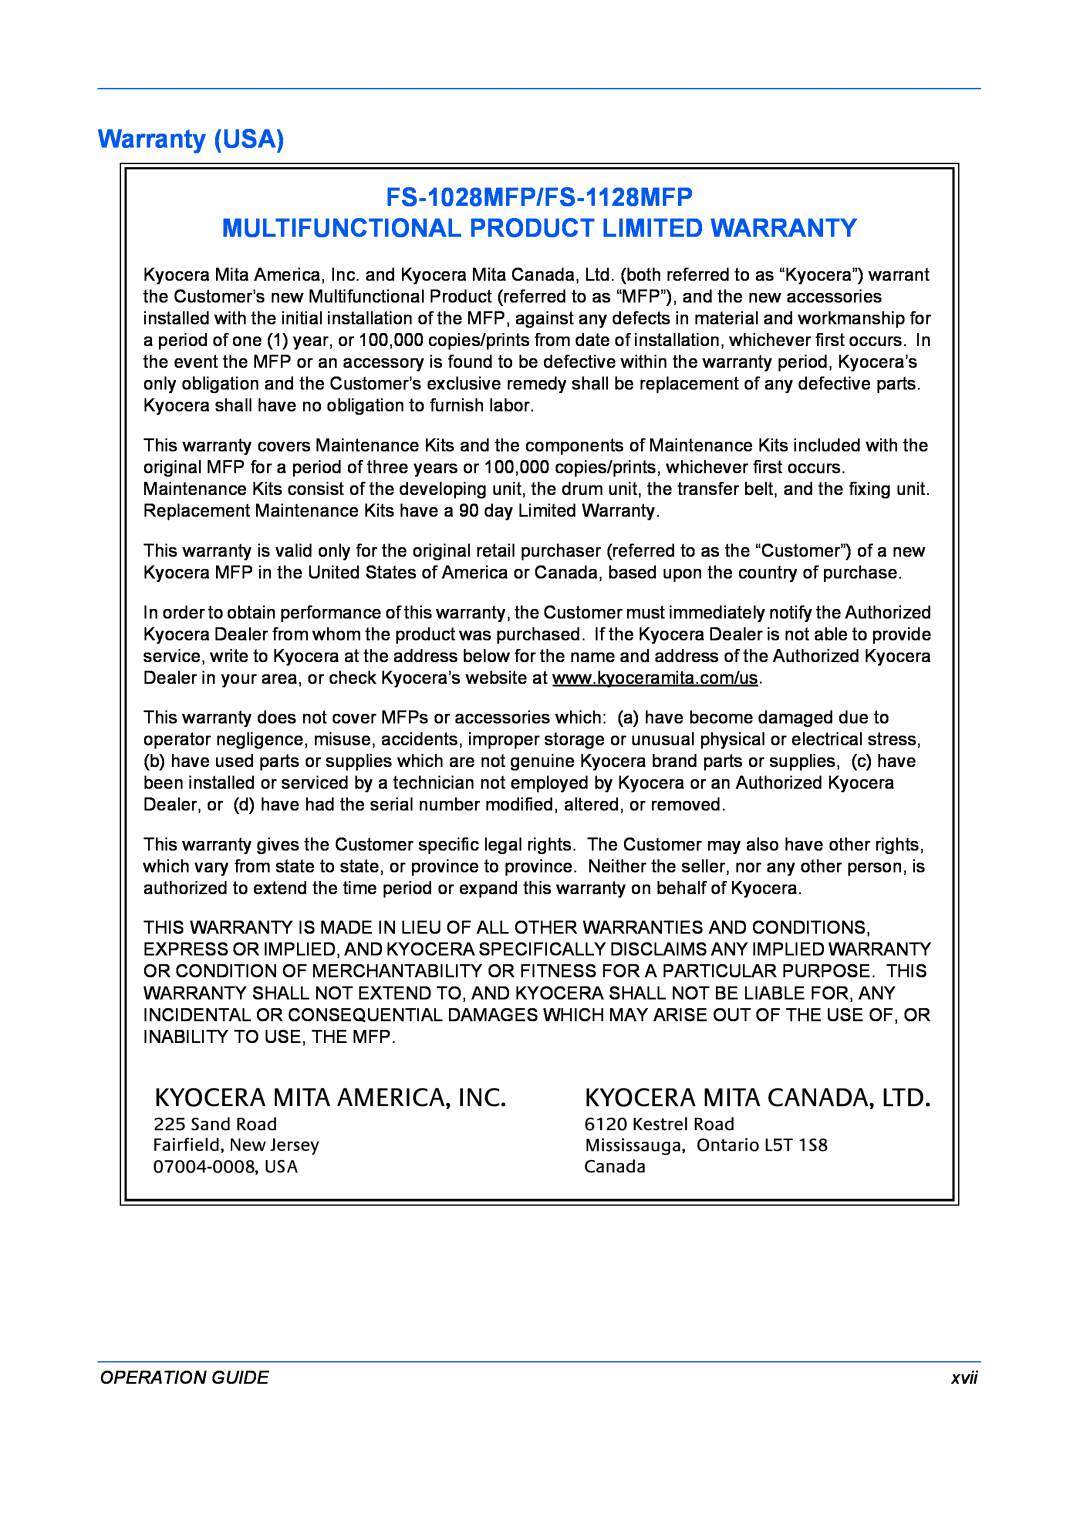 Kyocera manual Warranty USA FS-1028MFP/FS-1128MFP, Multifunctional Product Limited Warranty, Operation Guide, xvii 